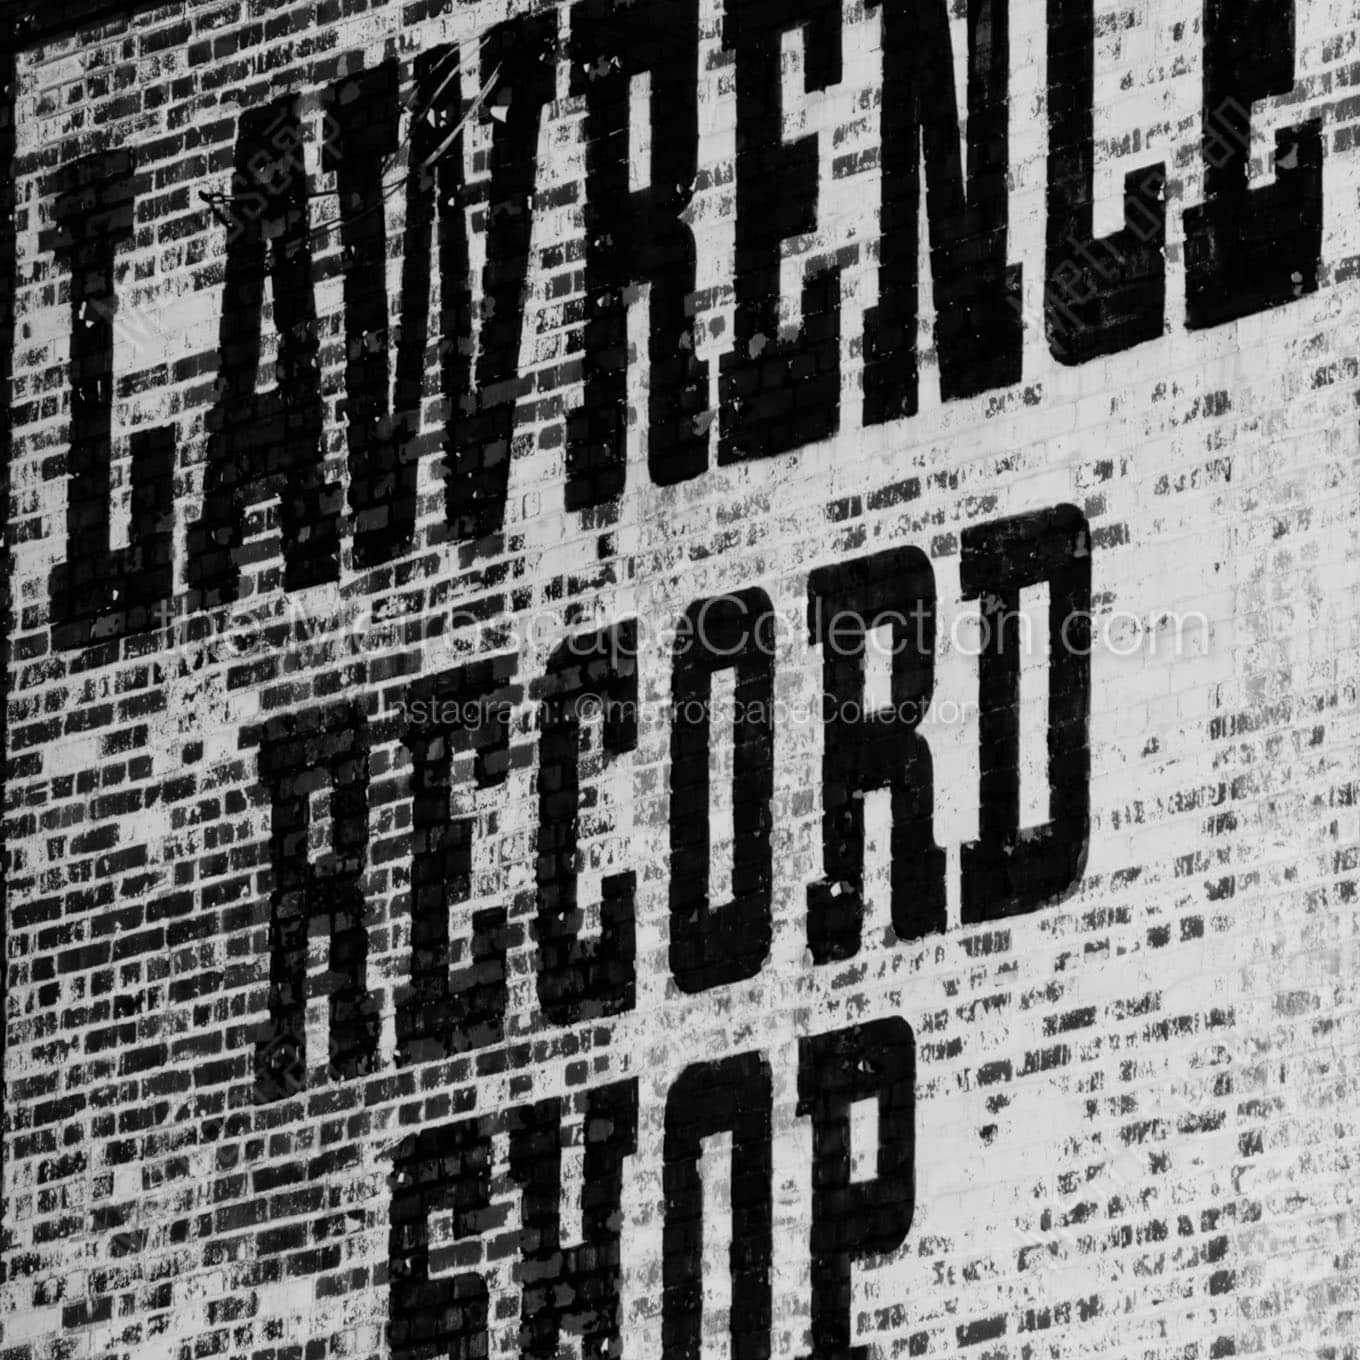 lawrence record shop Black & White Wall Art